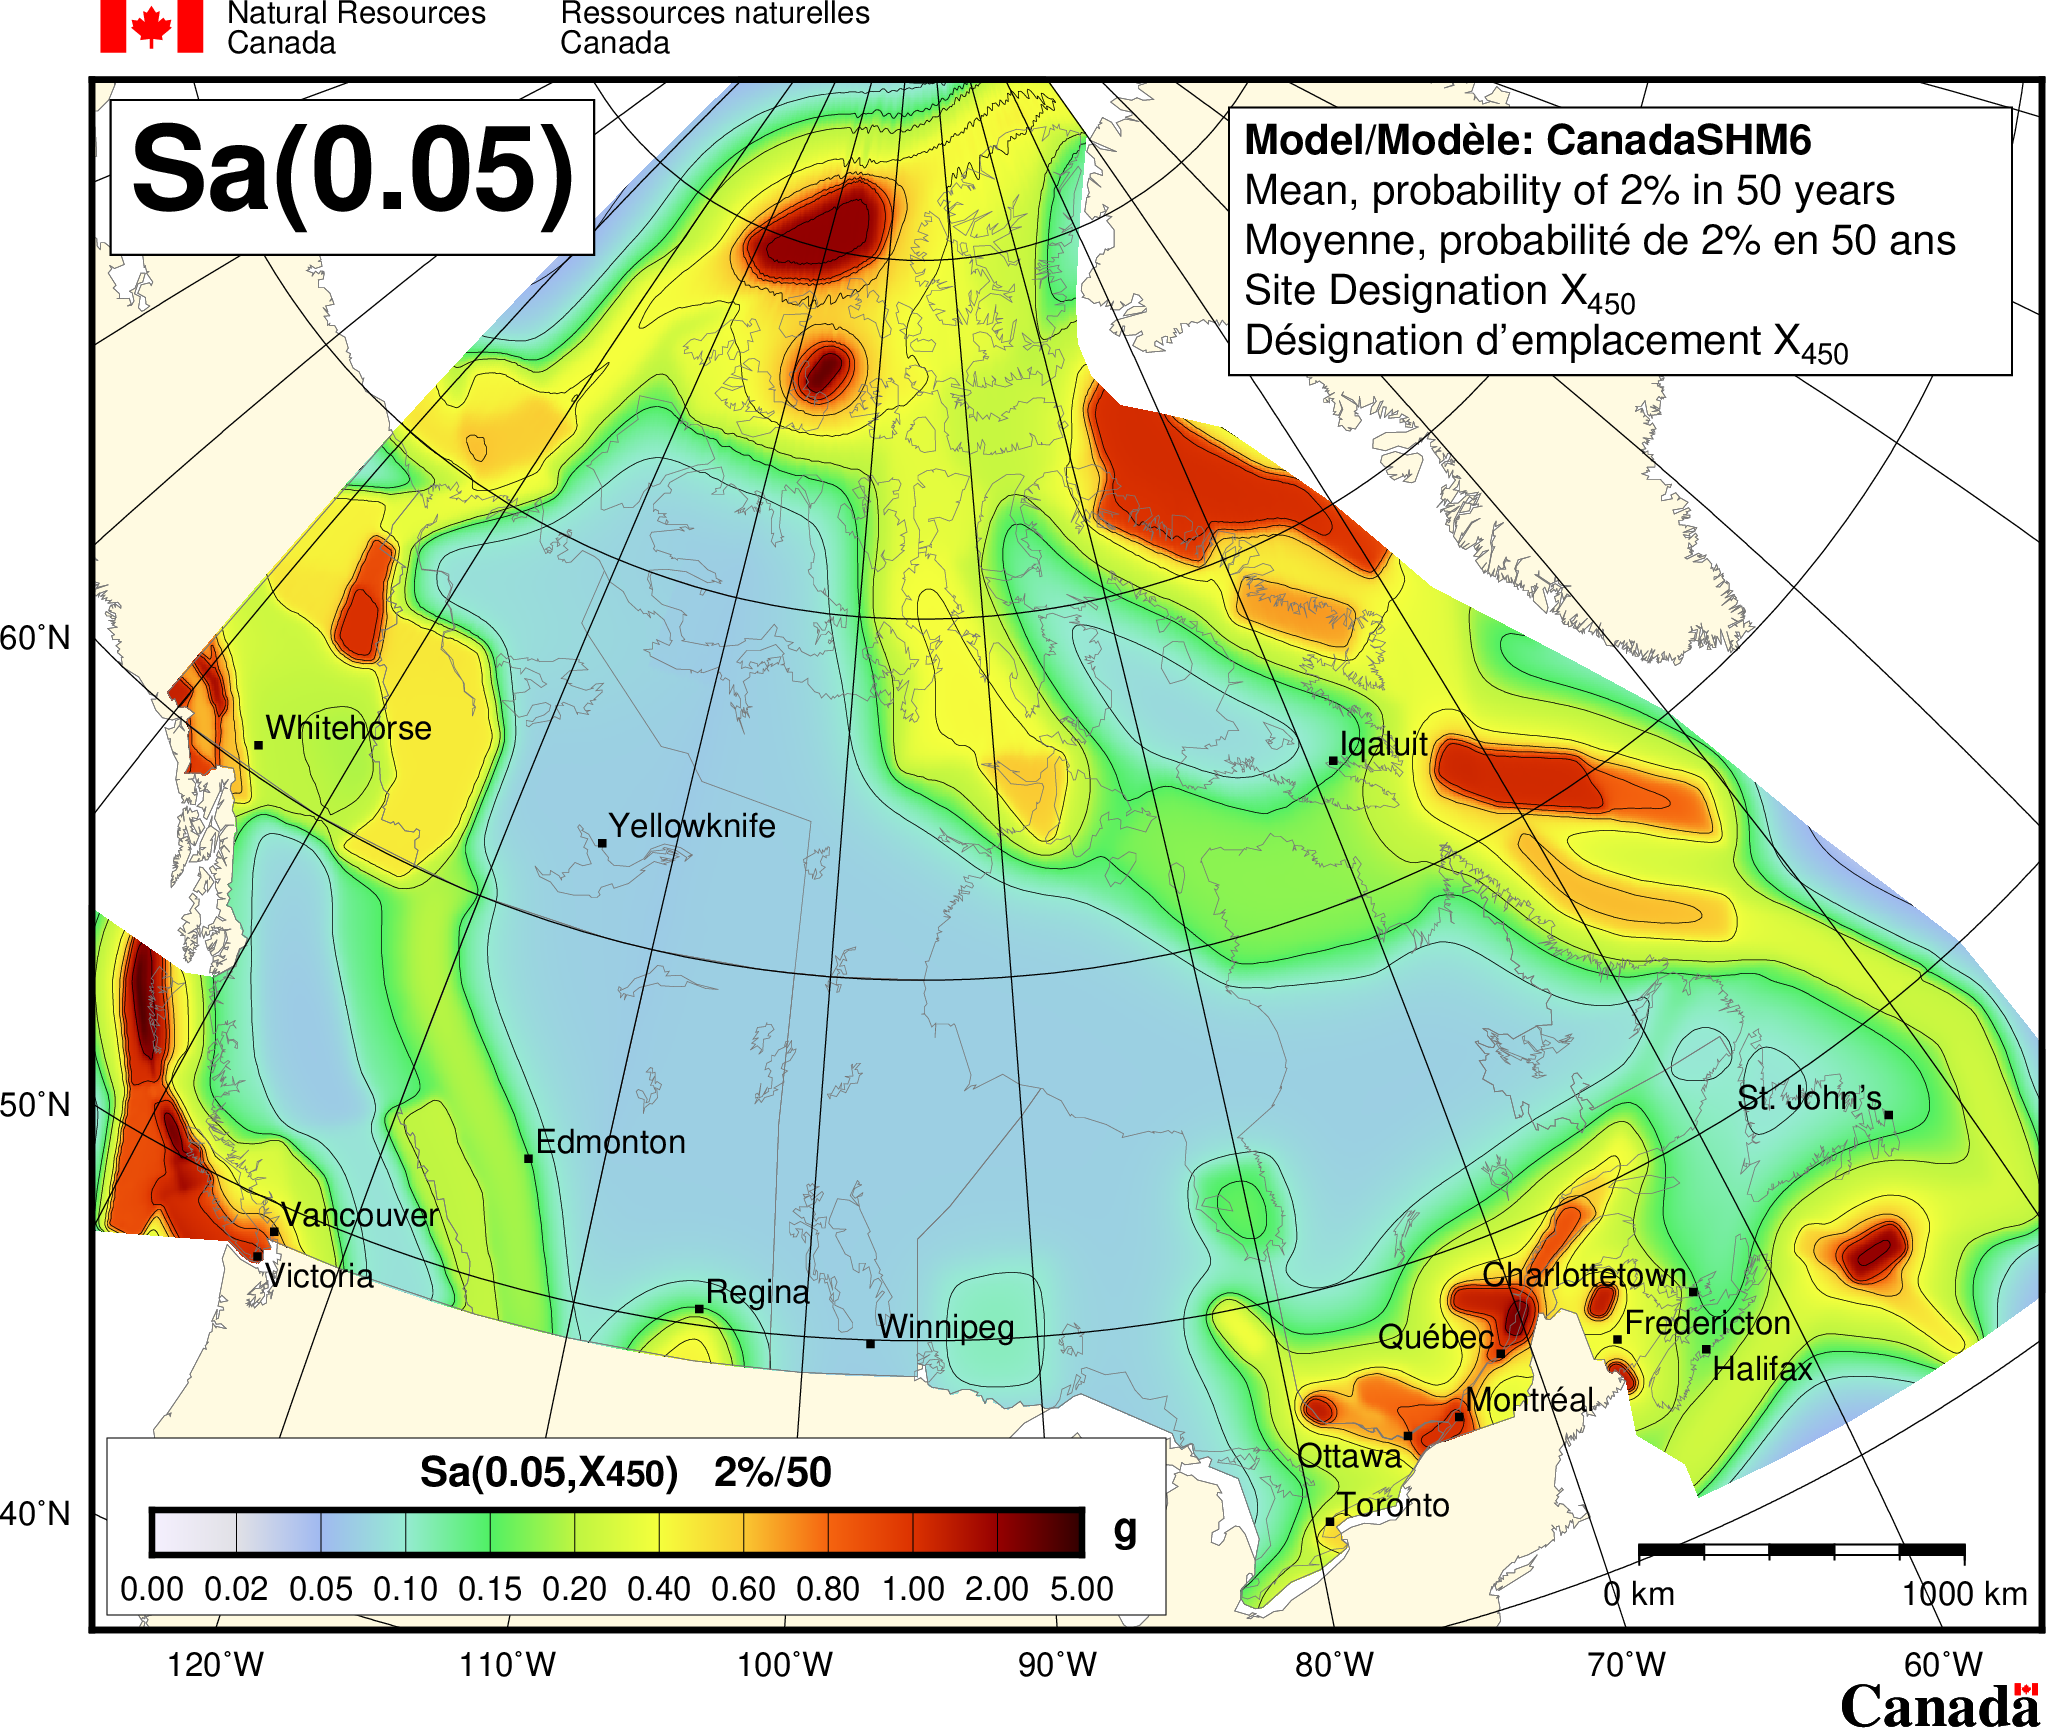 2020 NBCC seismic hazard map - Sa(0.05)